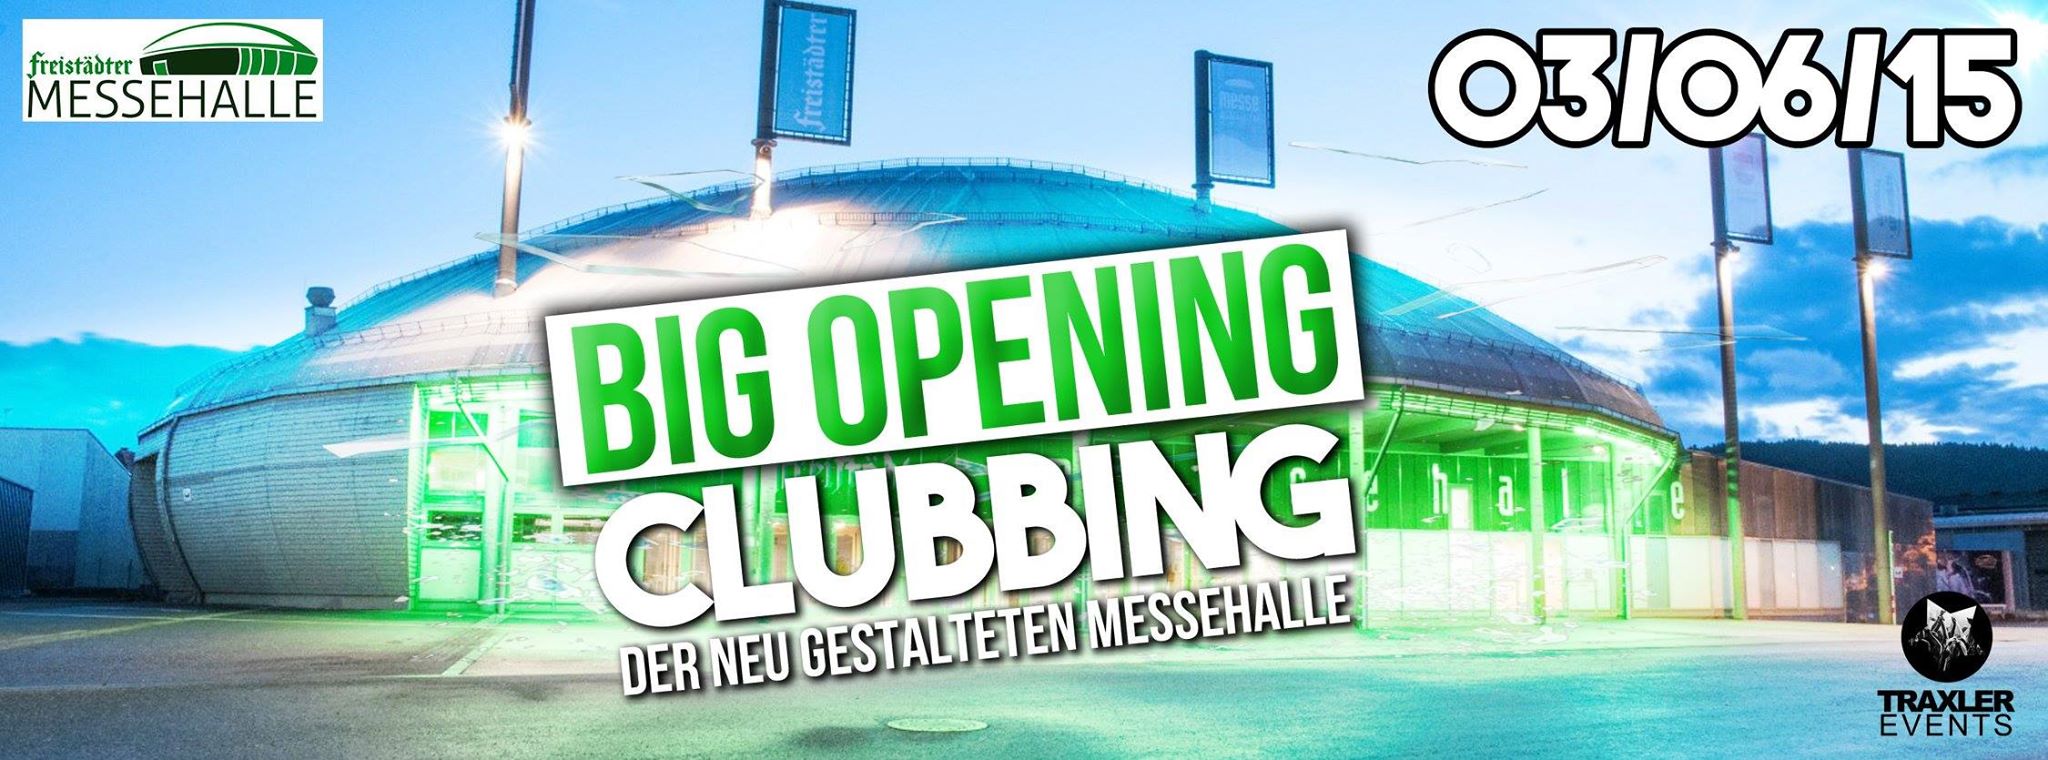 Big Opening Clubbing 2015 Messehalle